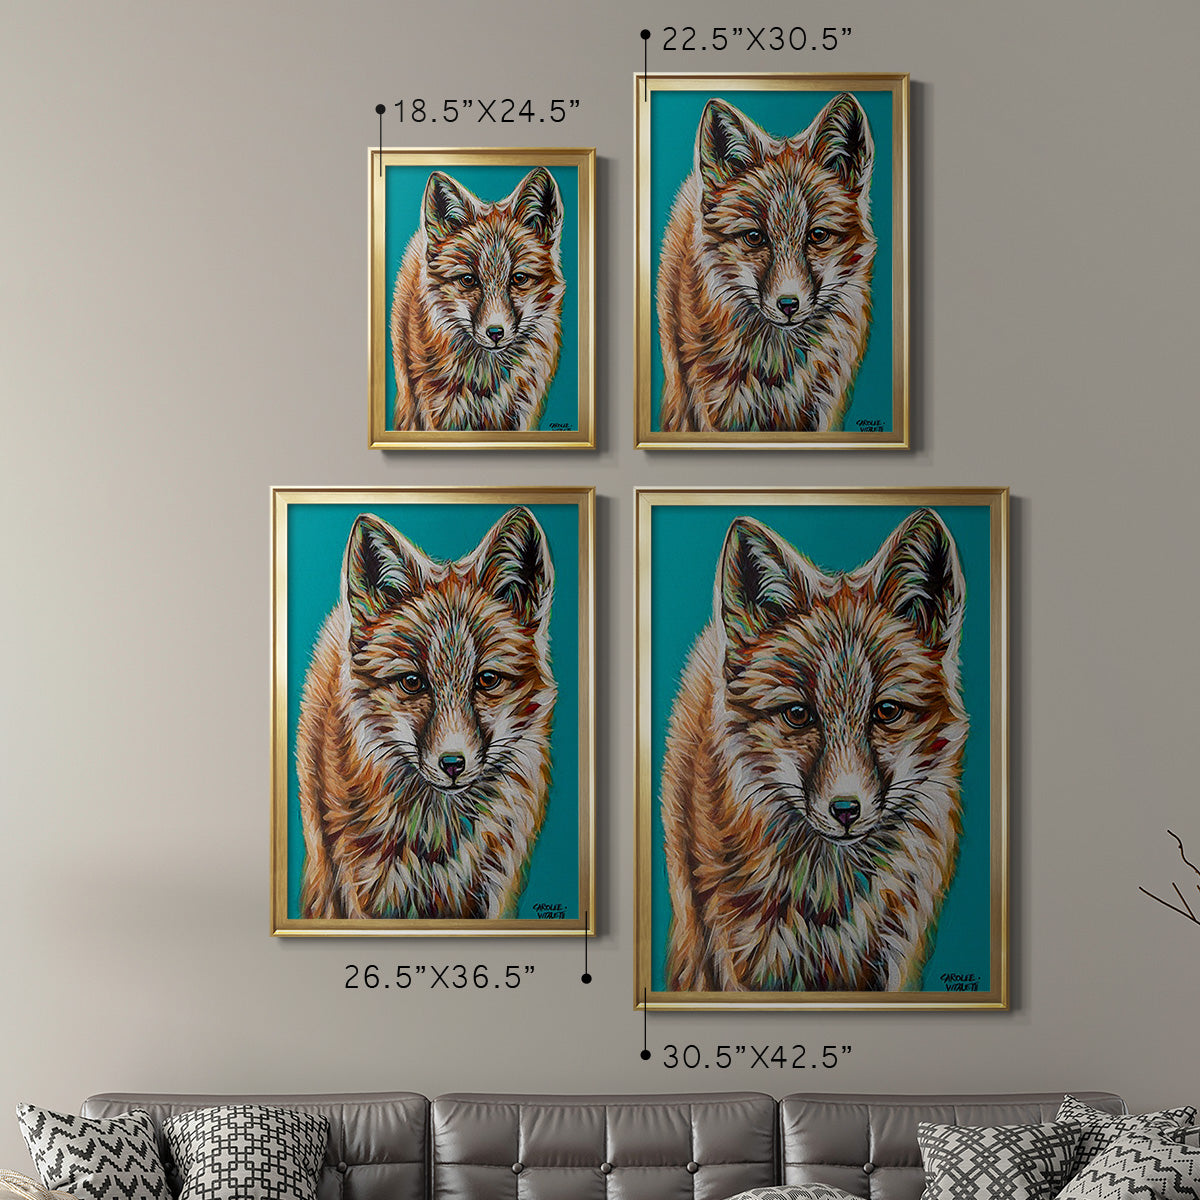 Teal Fox Premium Framed Print - Ready to Hang